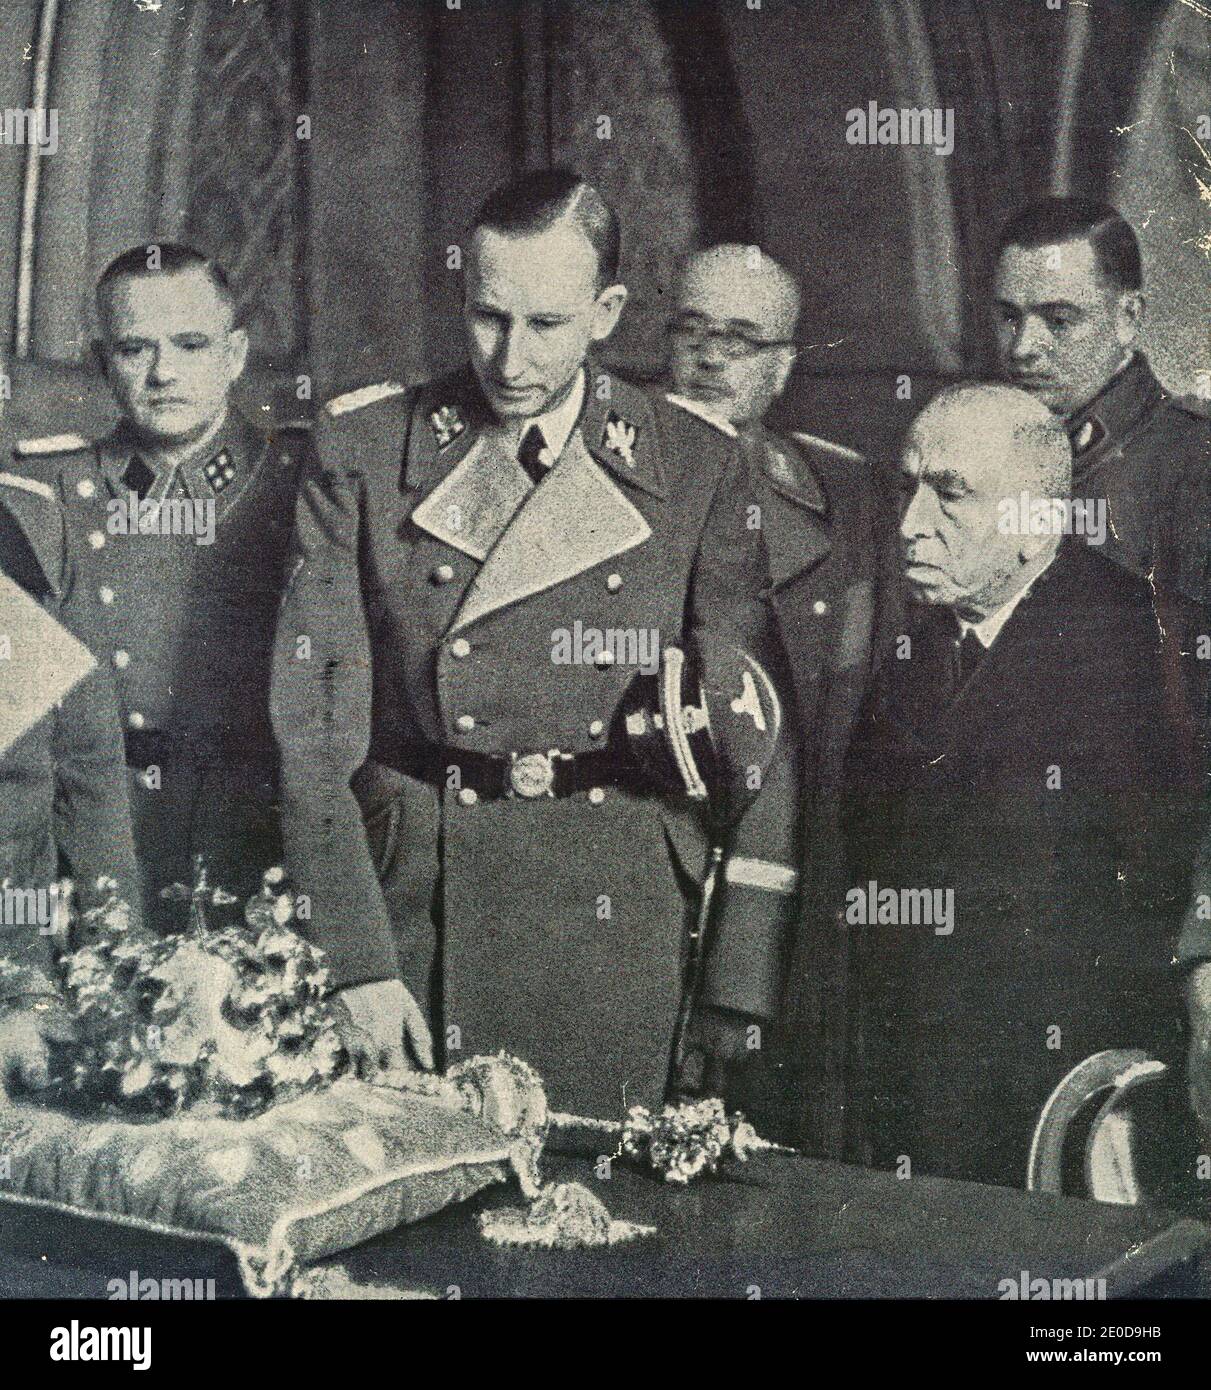 PRAGUE, PROTECTORATE OF BOHEMIA AND MORAVIA - NOVEMBER 19, 1941:Reinhard  Heydrich, Deputy Reich Protector of the Protectorate of Bohemia and Moravia  Stock Photo - Alamy